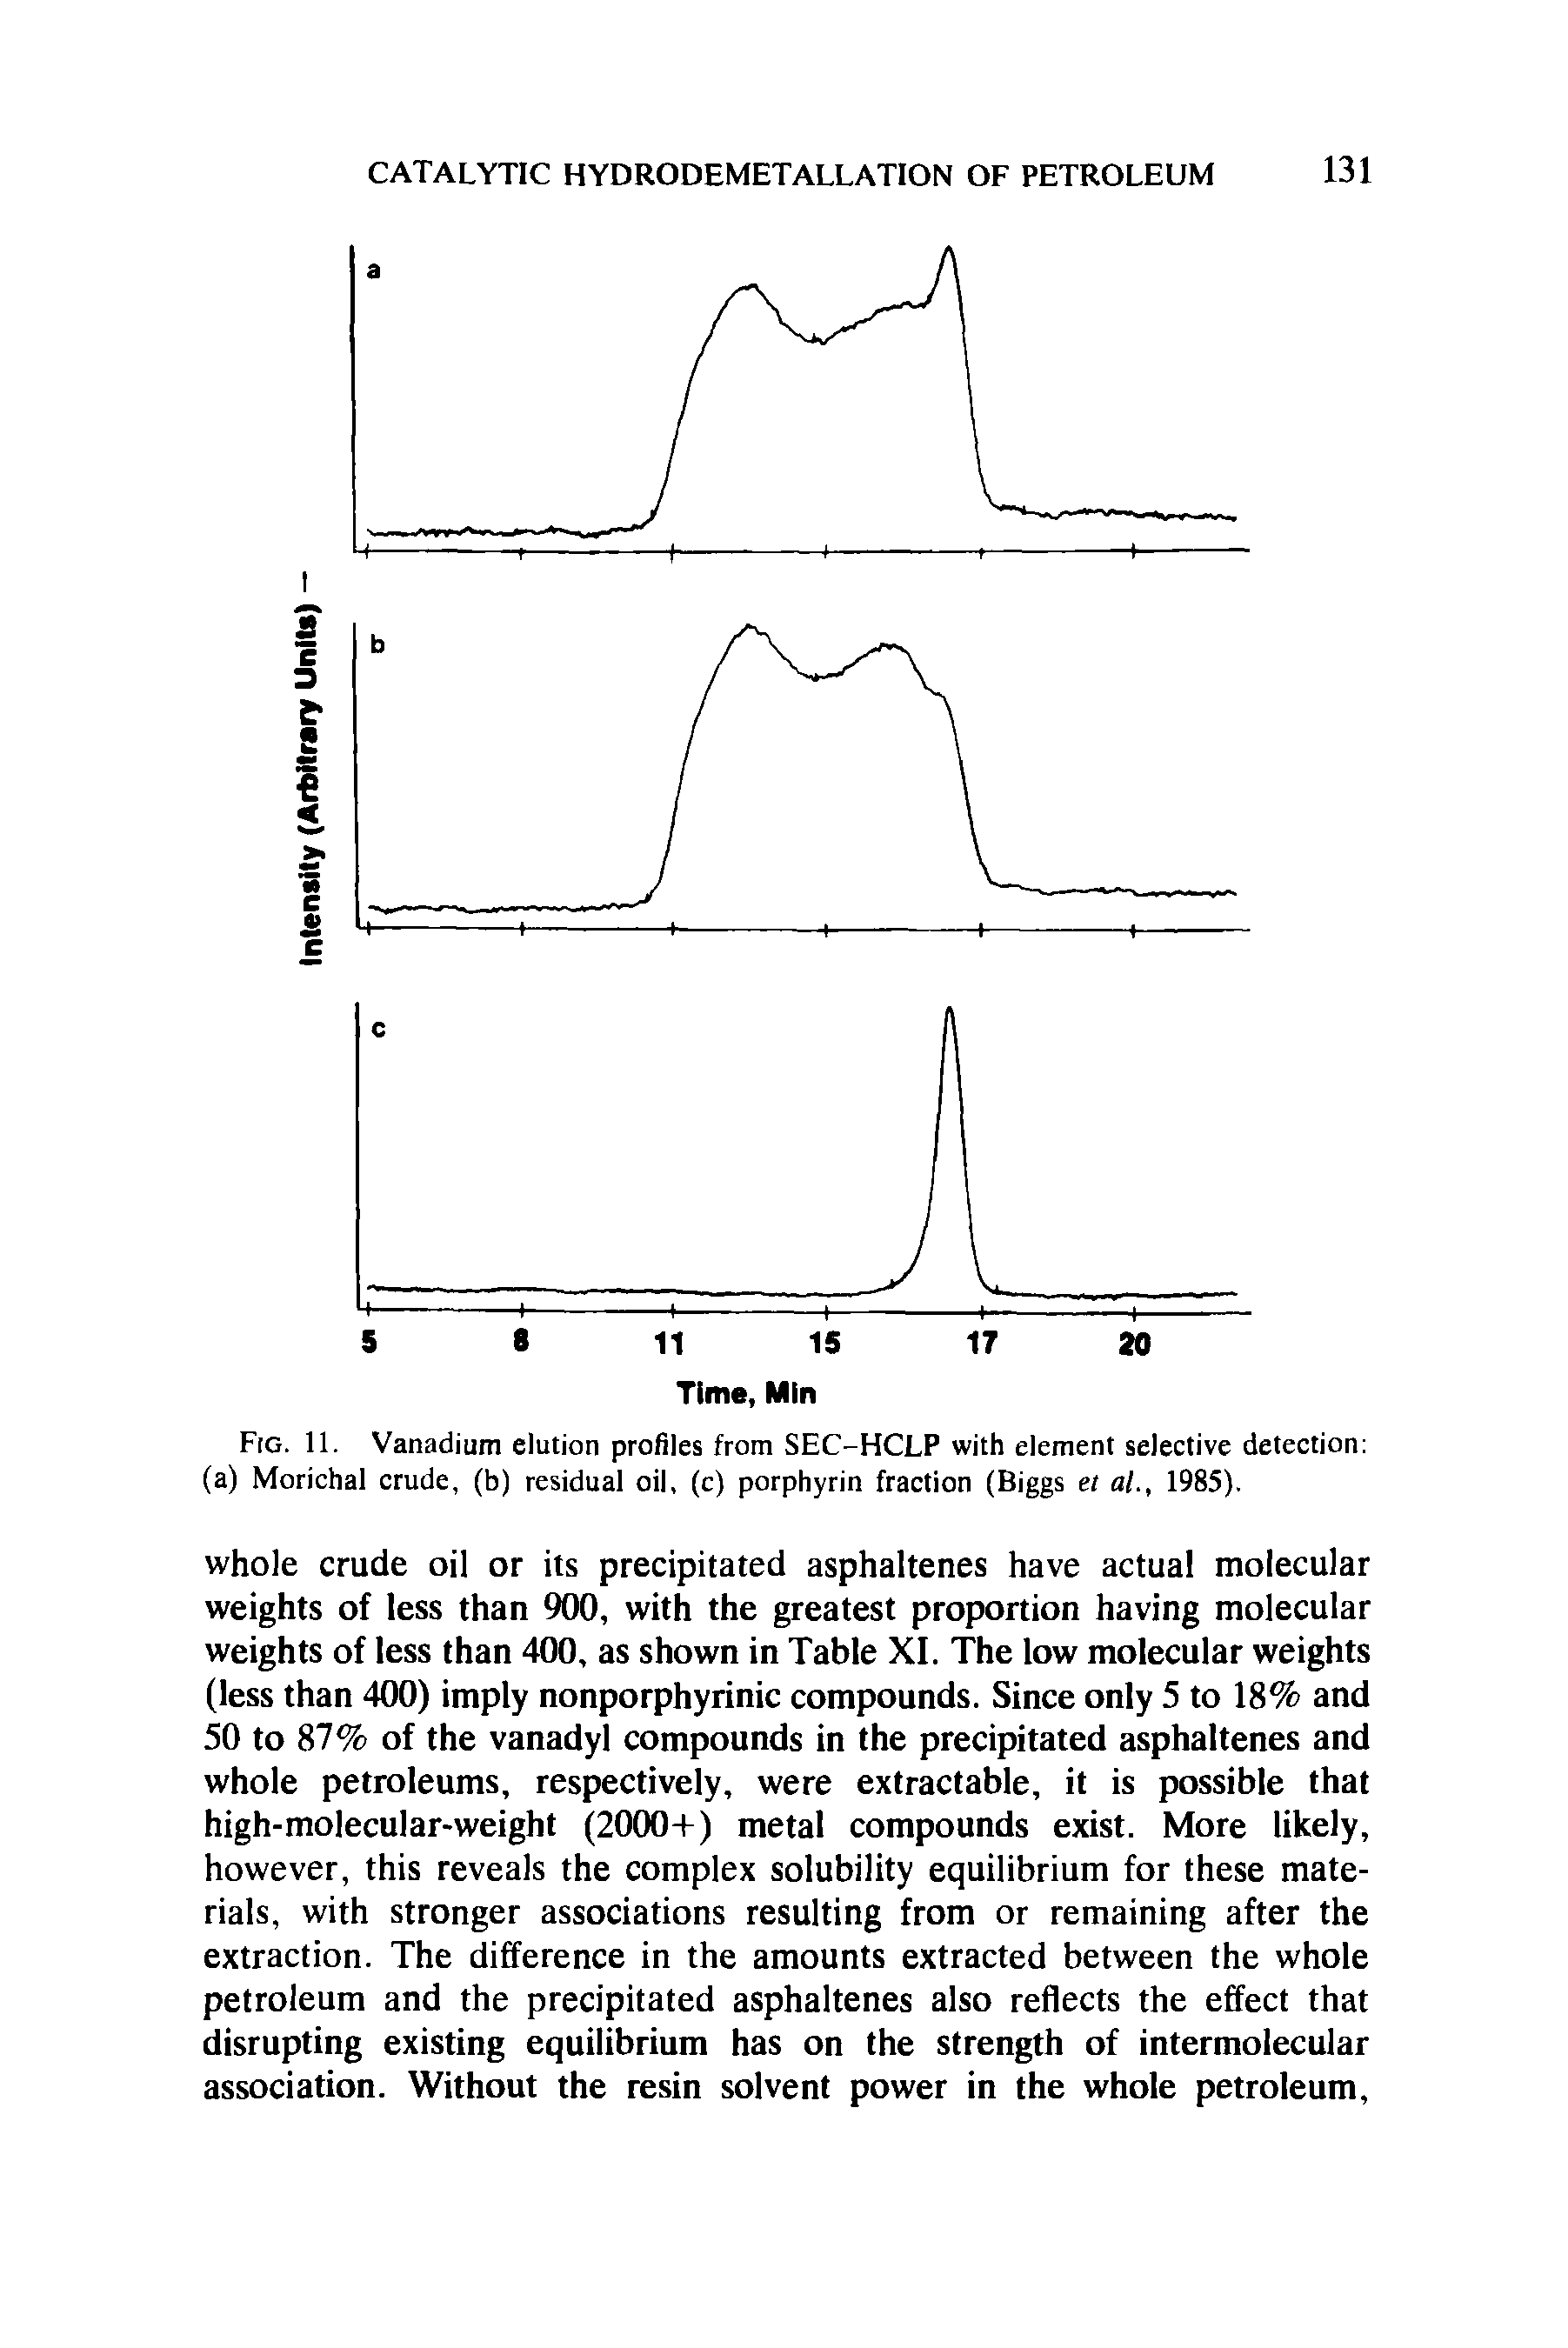 Fig. 11. Vanadium elution profiles from SEC-HCLP with element selective detection (a) Morichal crude, (b) residual oil, (c) porphyrin fraction (Biggs et al., 1985).